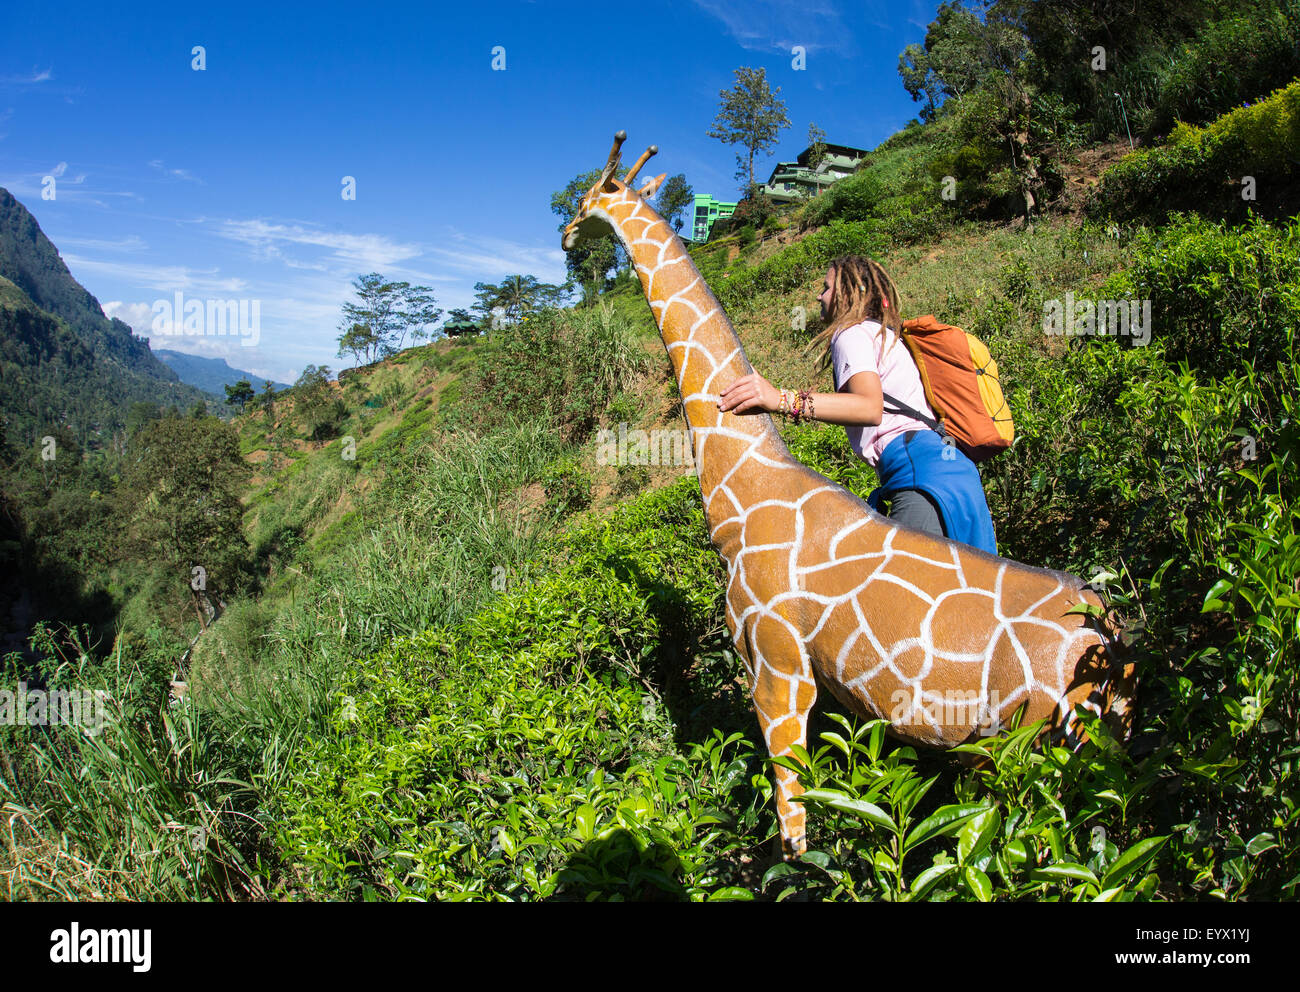 Mutter-giraffe Stockfoto